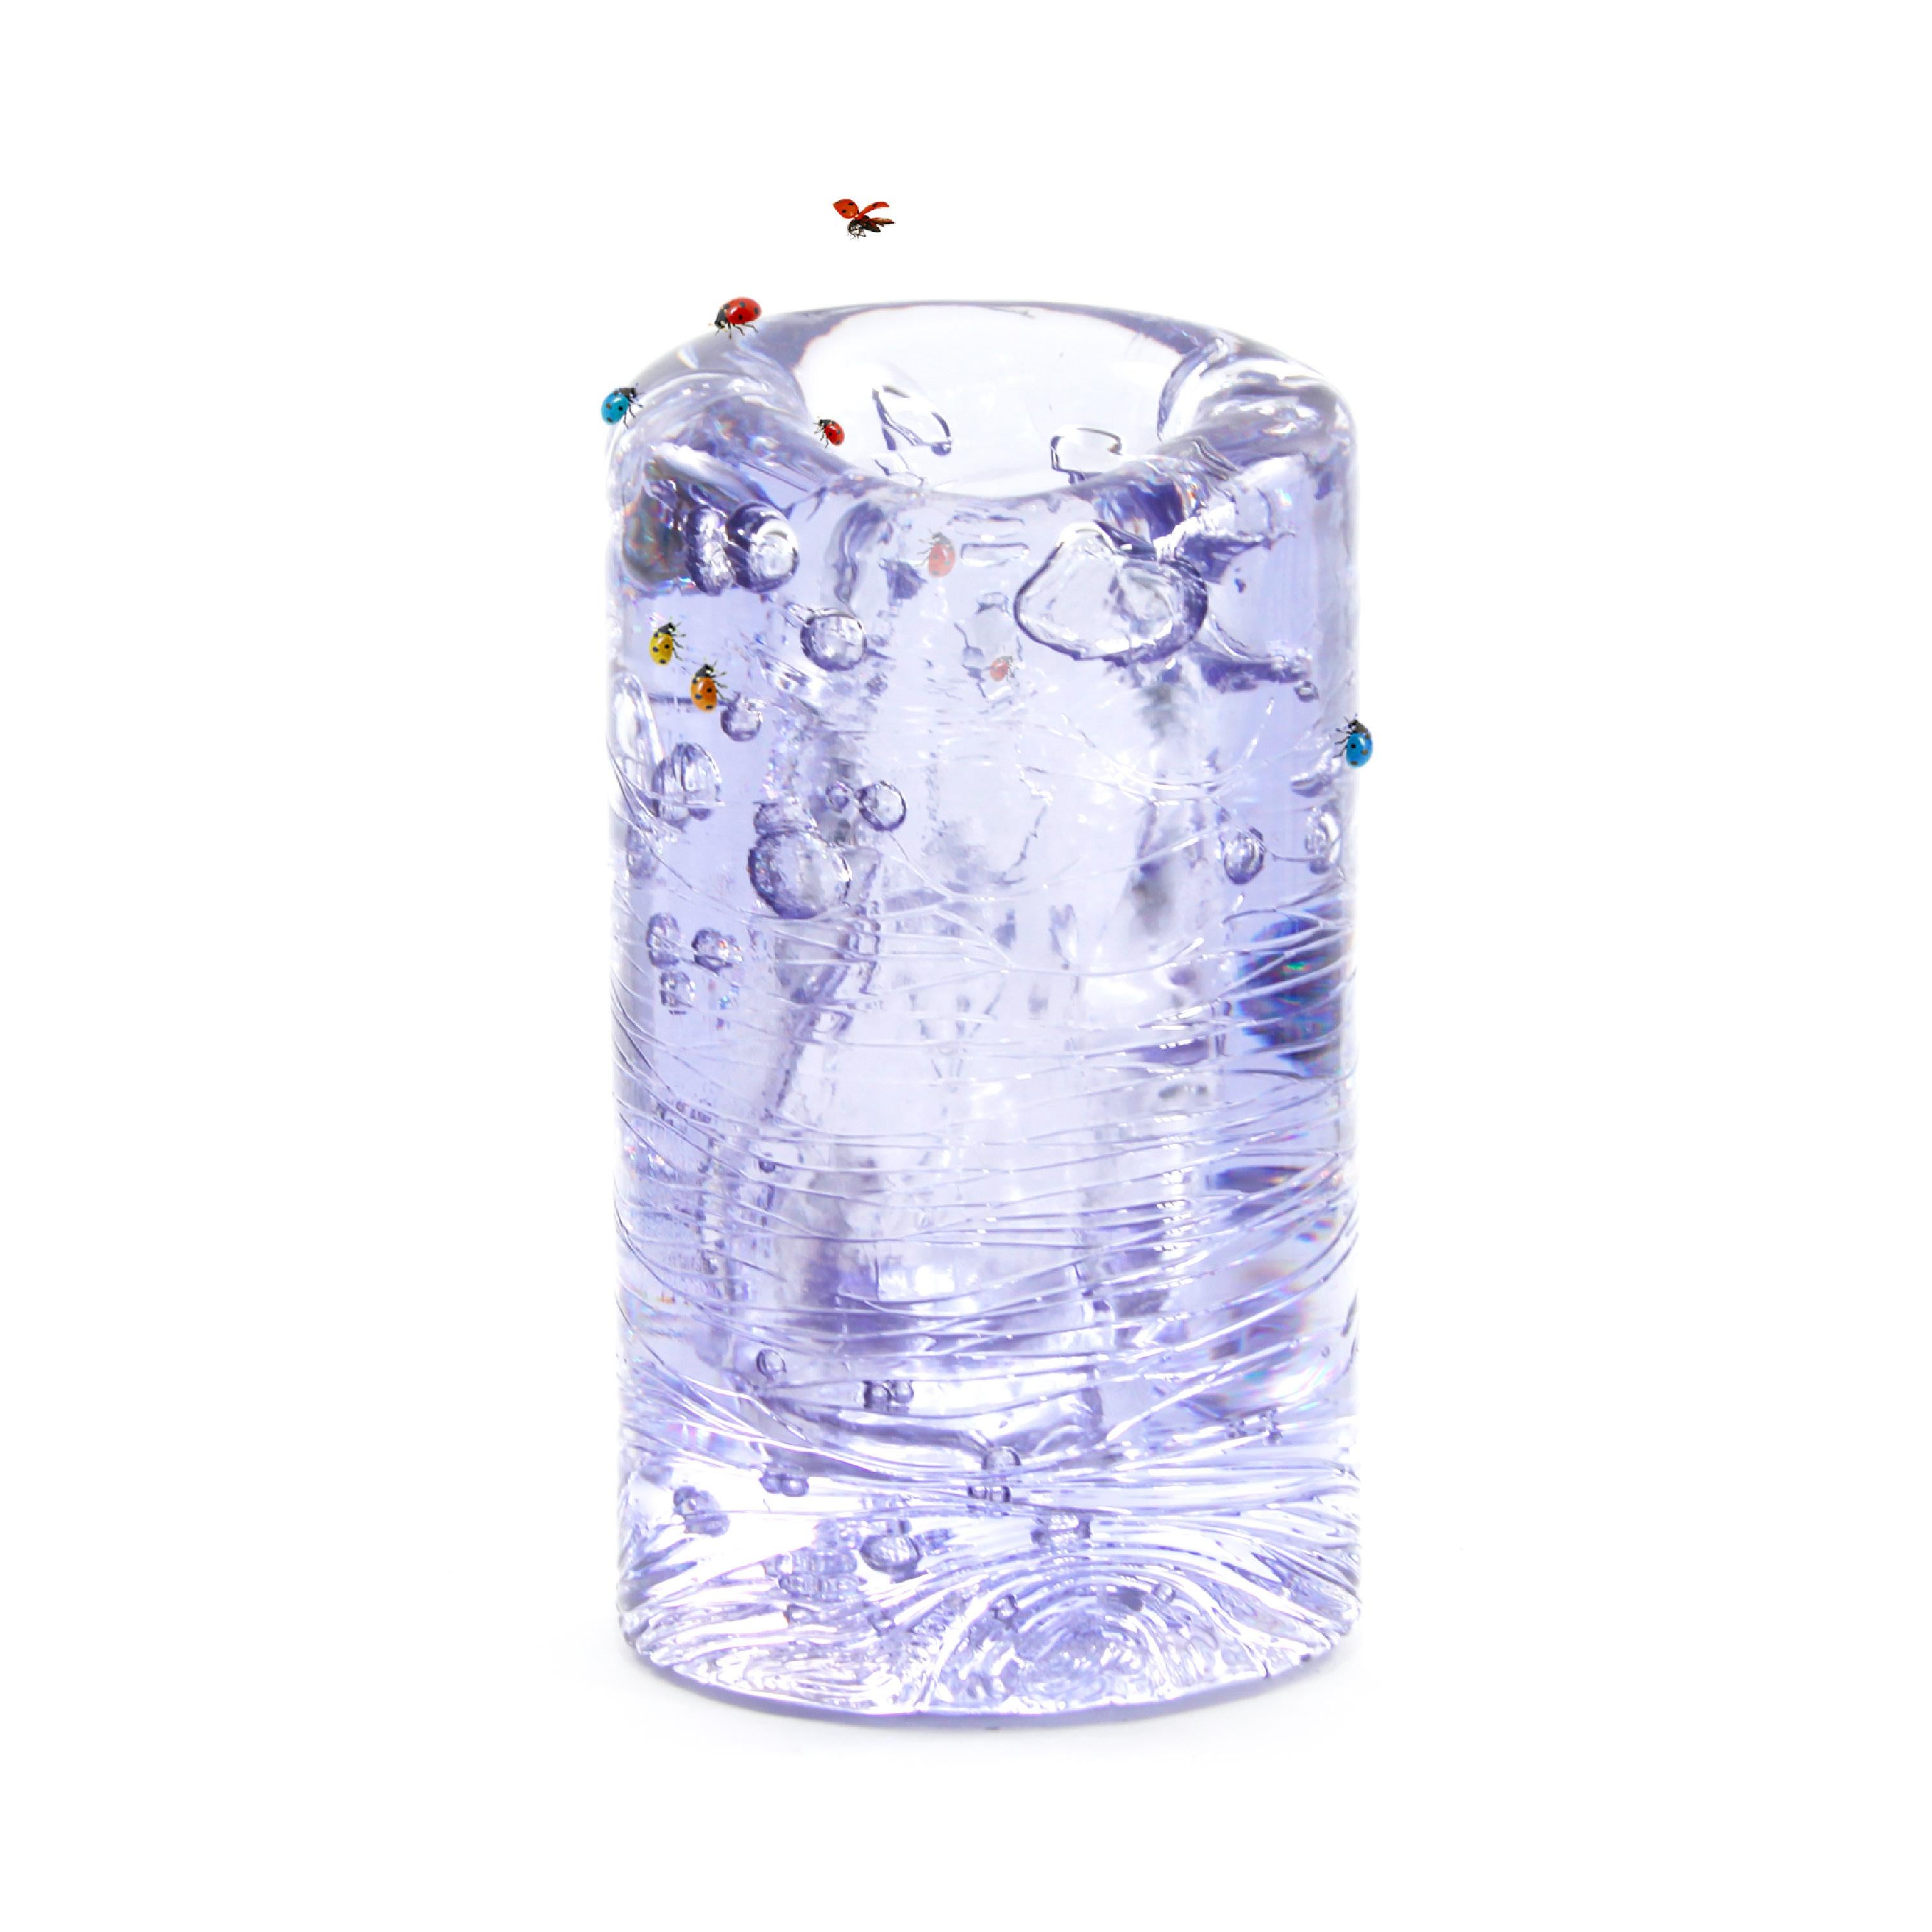 Resin Jungle Contemporary Vase, Small Bicolor Blue and Violet by Jacopo Foggini For Sale